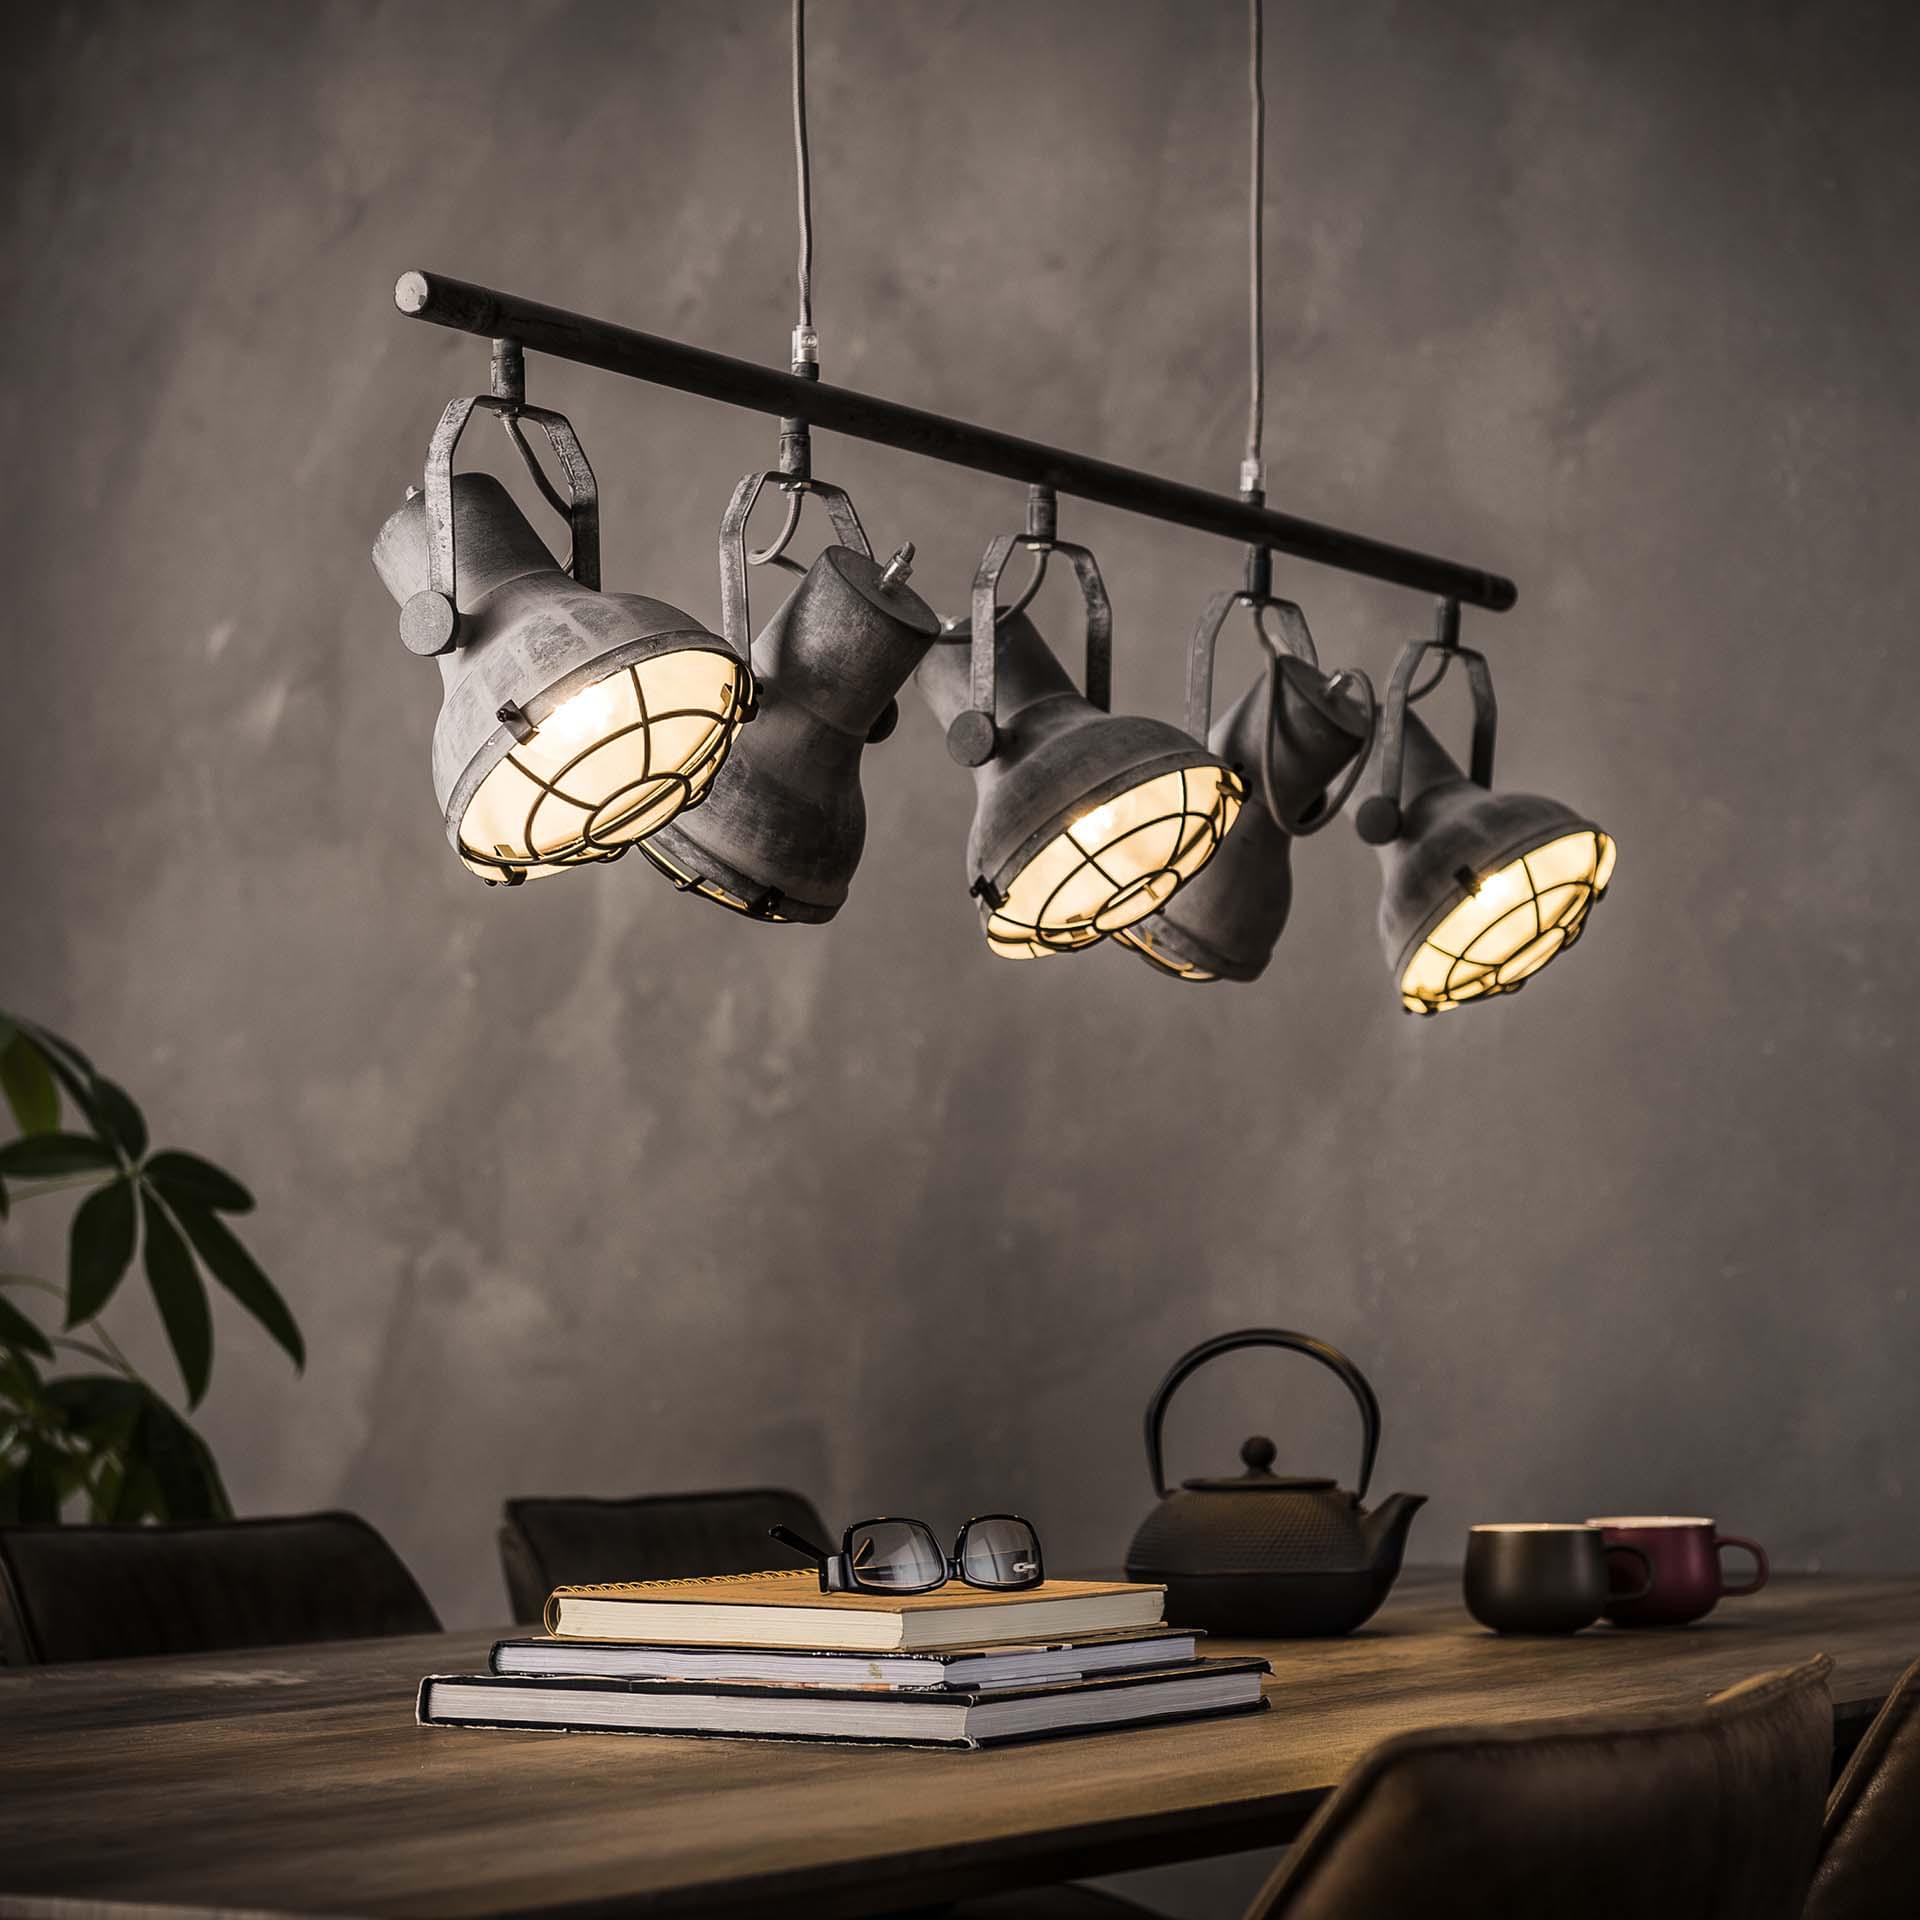 Foto: 000Sandra/Bankstelplus-hanglamp-industrieel-interieur-woonaccessoires-stoer-zwart-beton-lamp-deur-stoel-tafel-potten.jpg